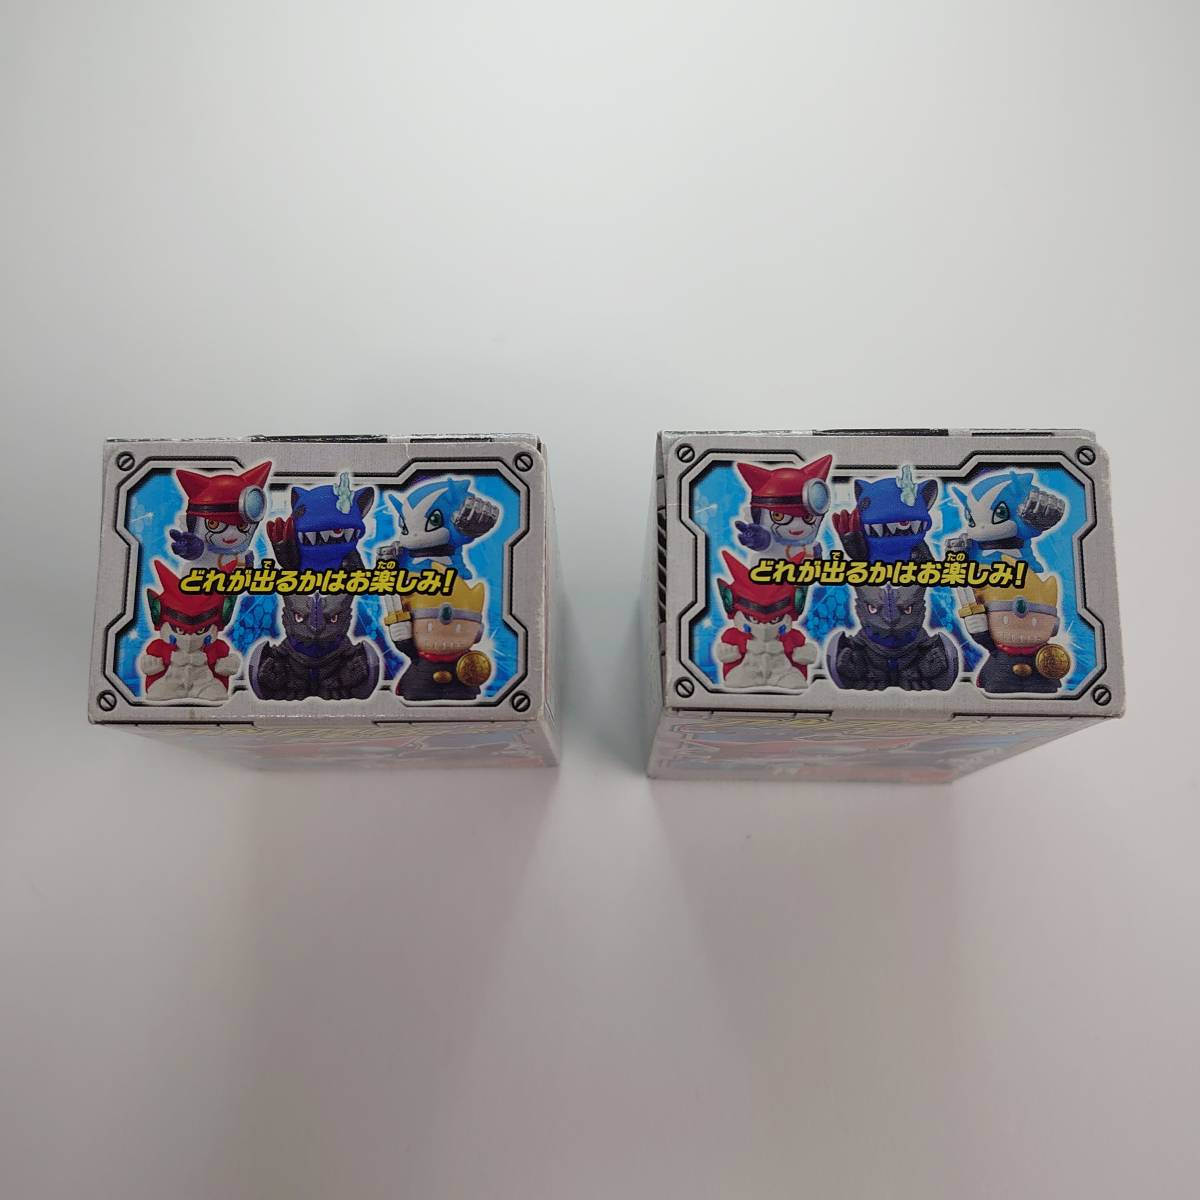  digimon Appli ARAI z Monstar z01 нераспечатанный товар 2 шт. комплект фигурка Digimon